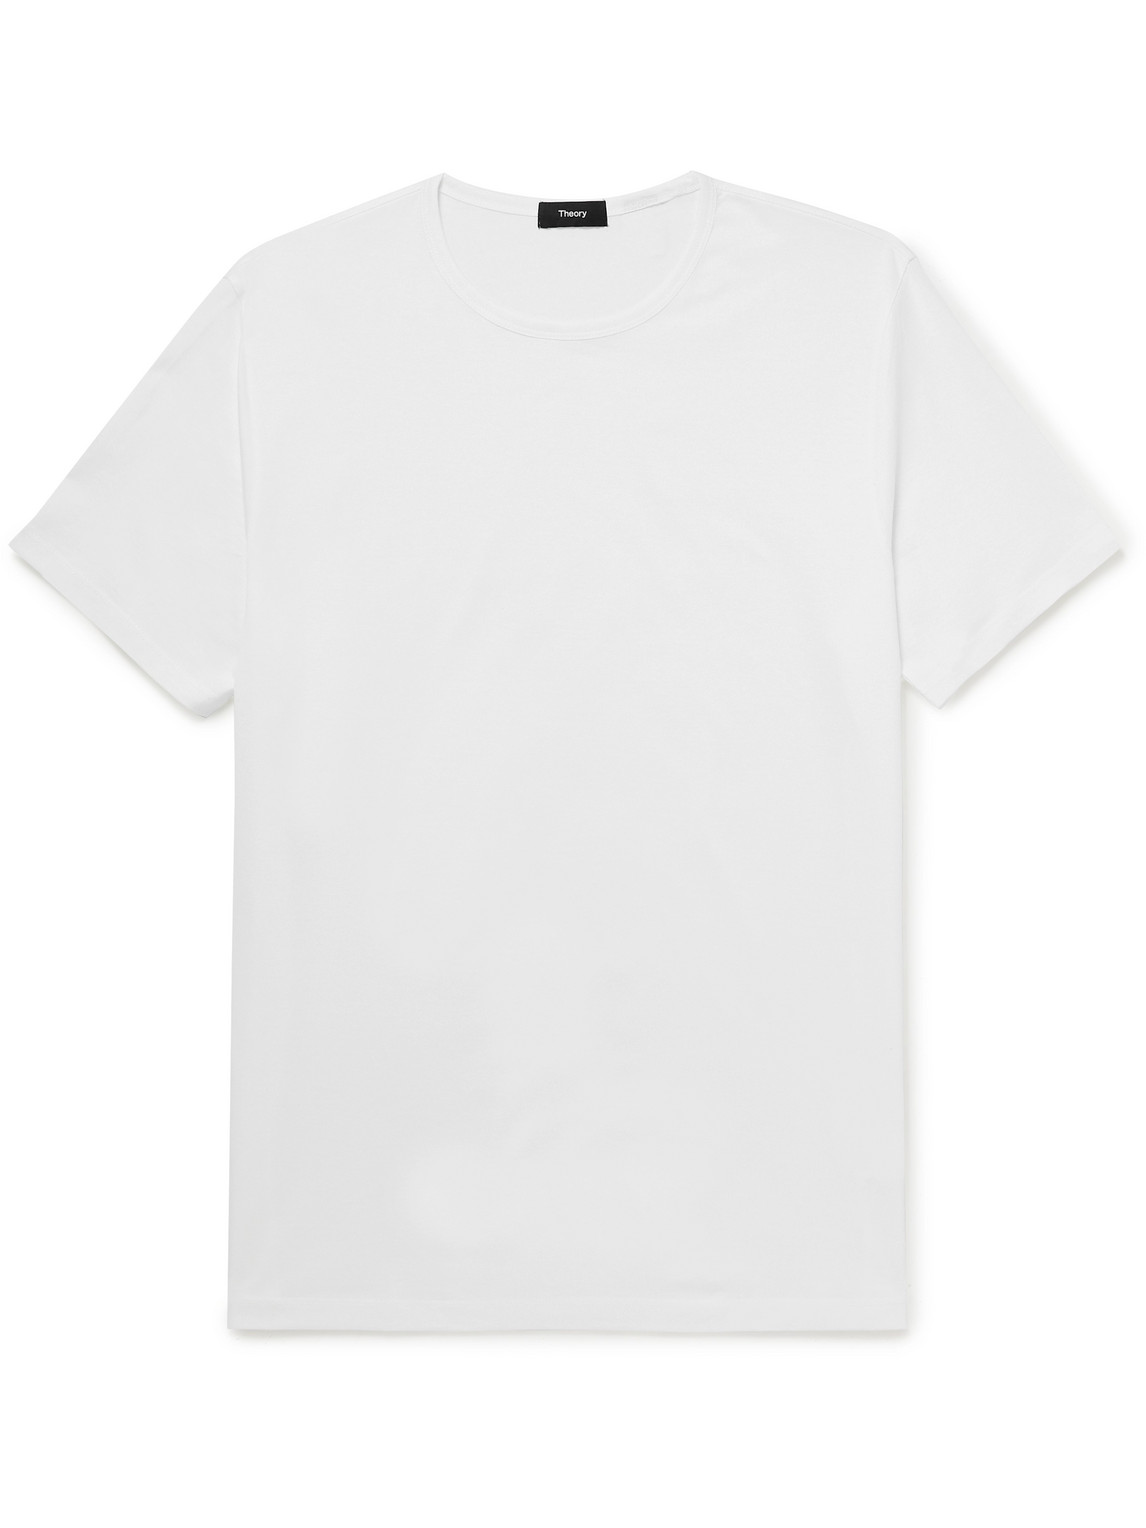 Theory - Cotton-Jersey T-Shirt - Men - White - XL von Theory